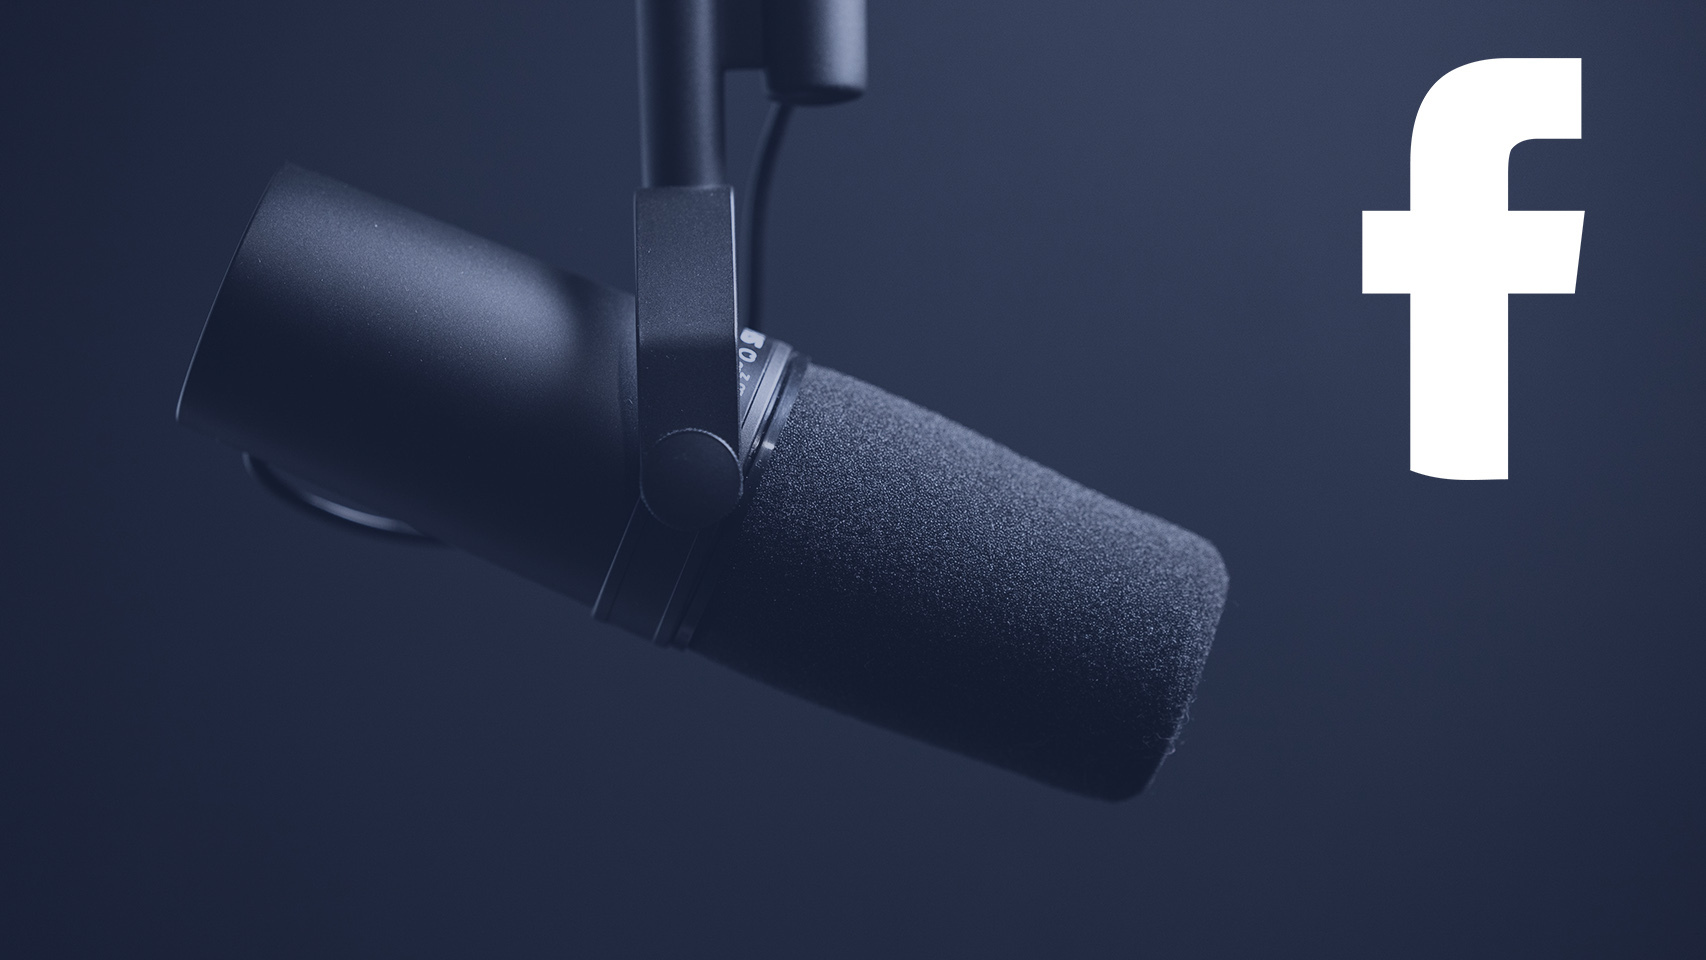 Auriculares inalámbricos Bluetooth 5.0, con micrófono y cancelación de ruido,  40 horas de uso - TD Systems SH500G11ANC